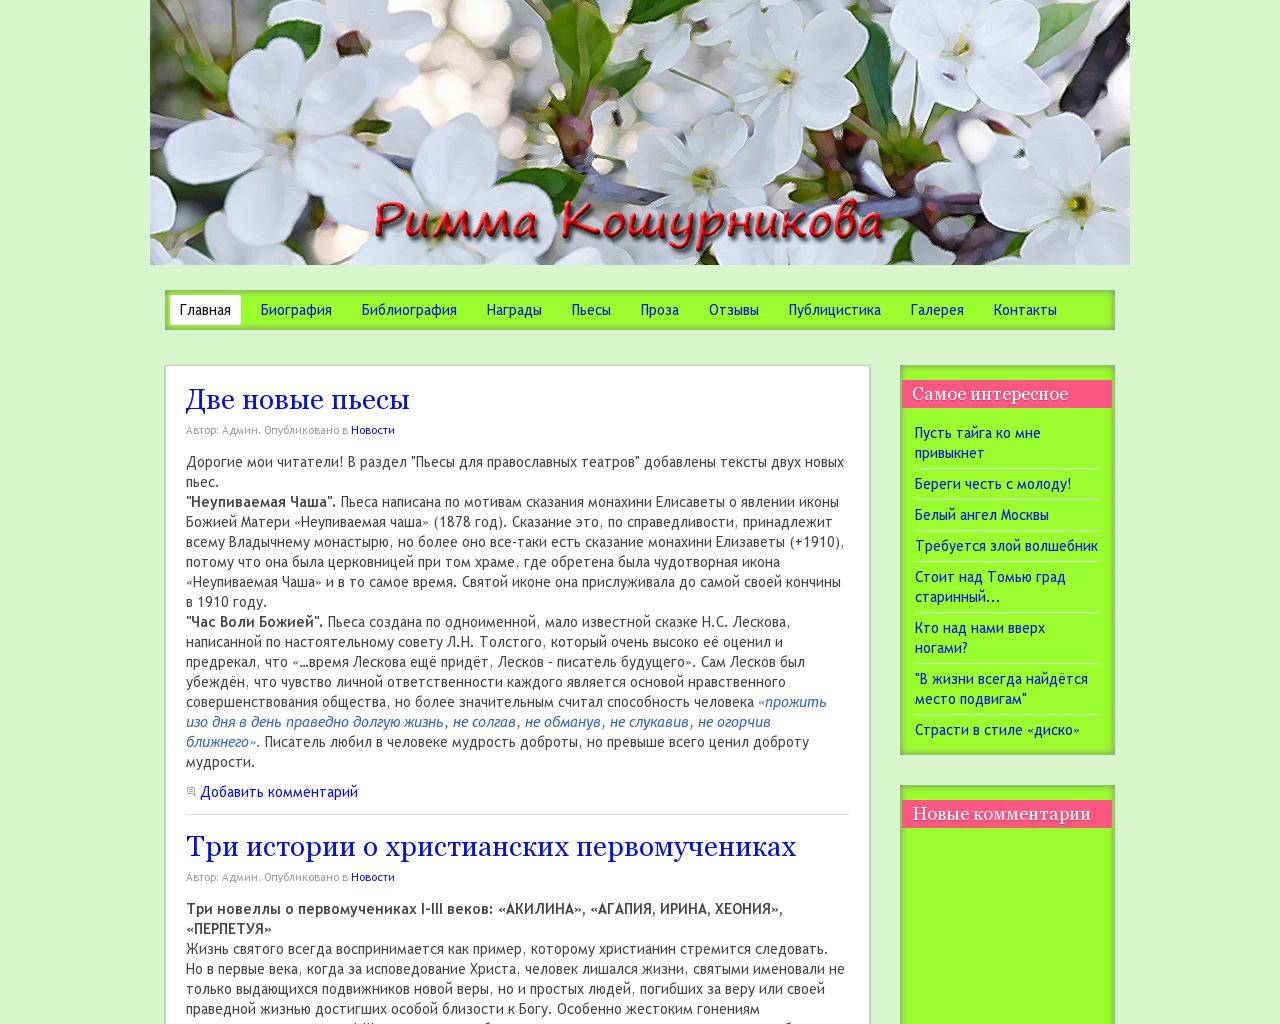 Изображение сайта риммакошурникова.рф в разрешении 1280x1024